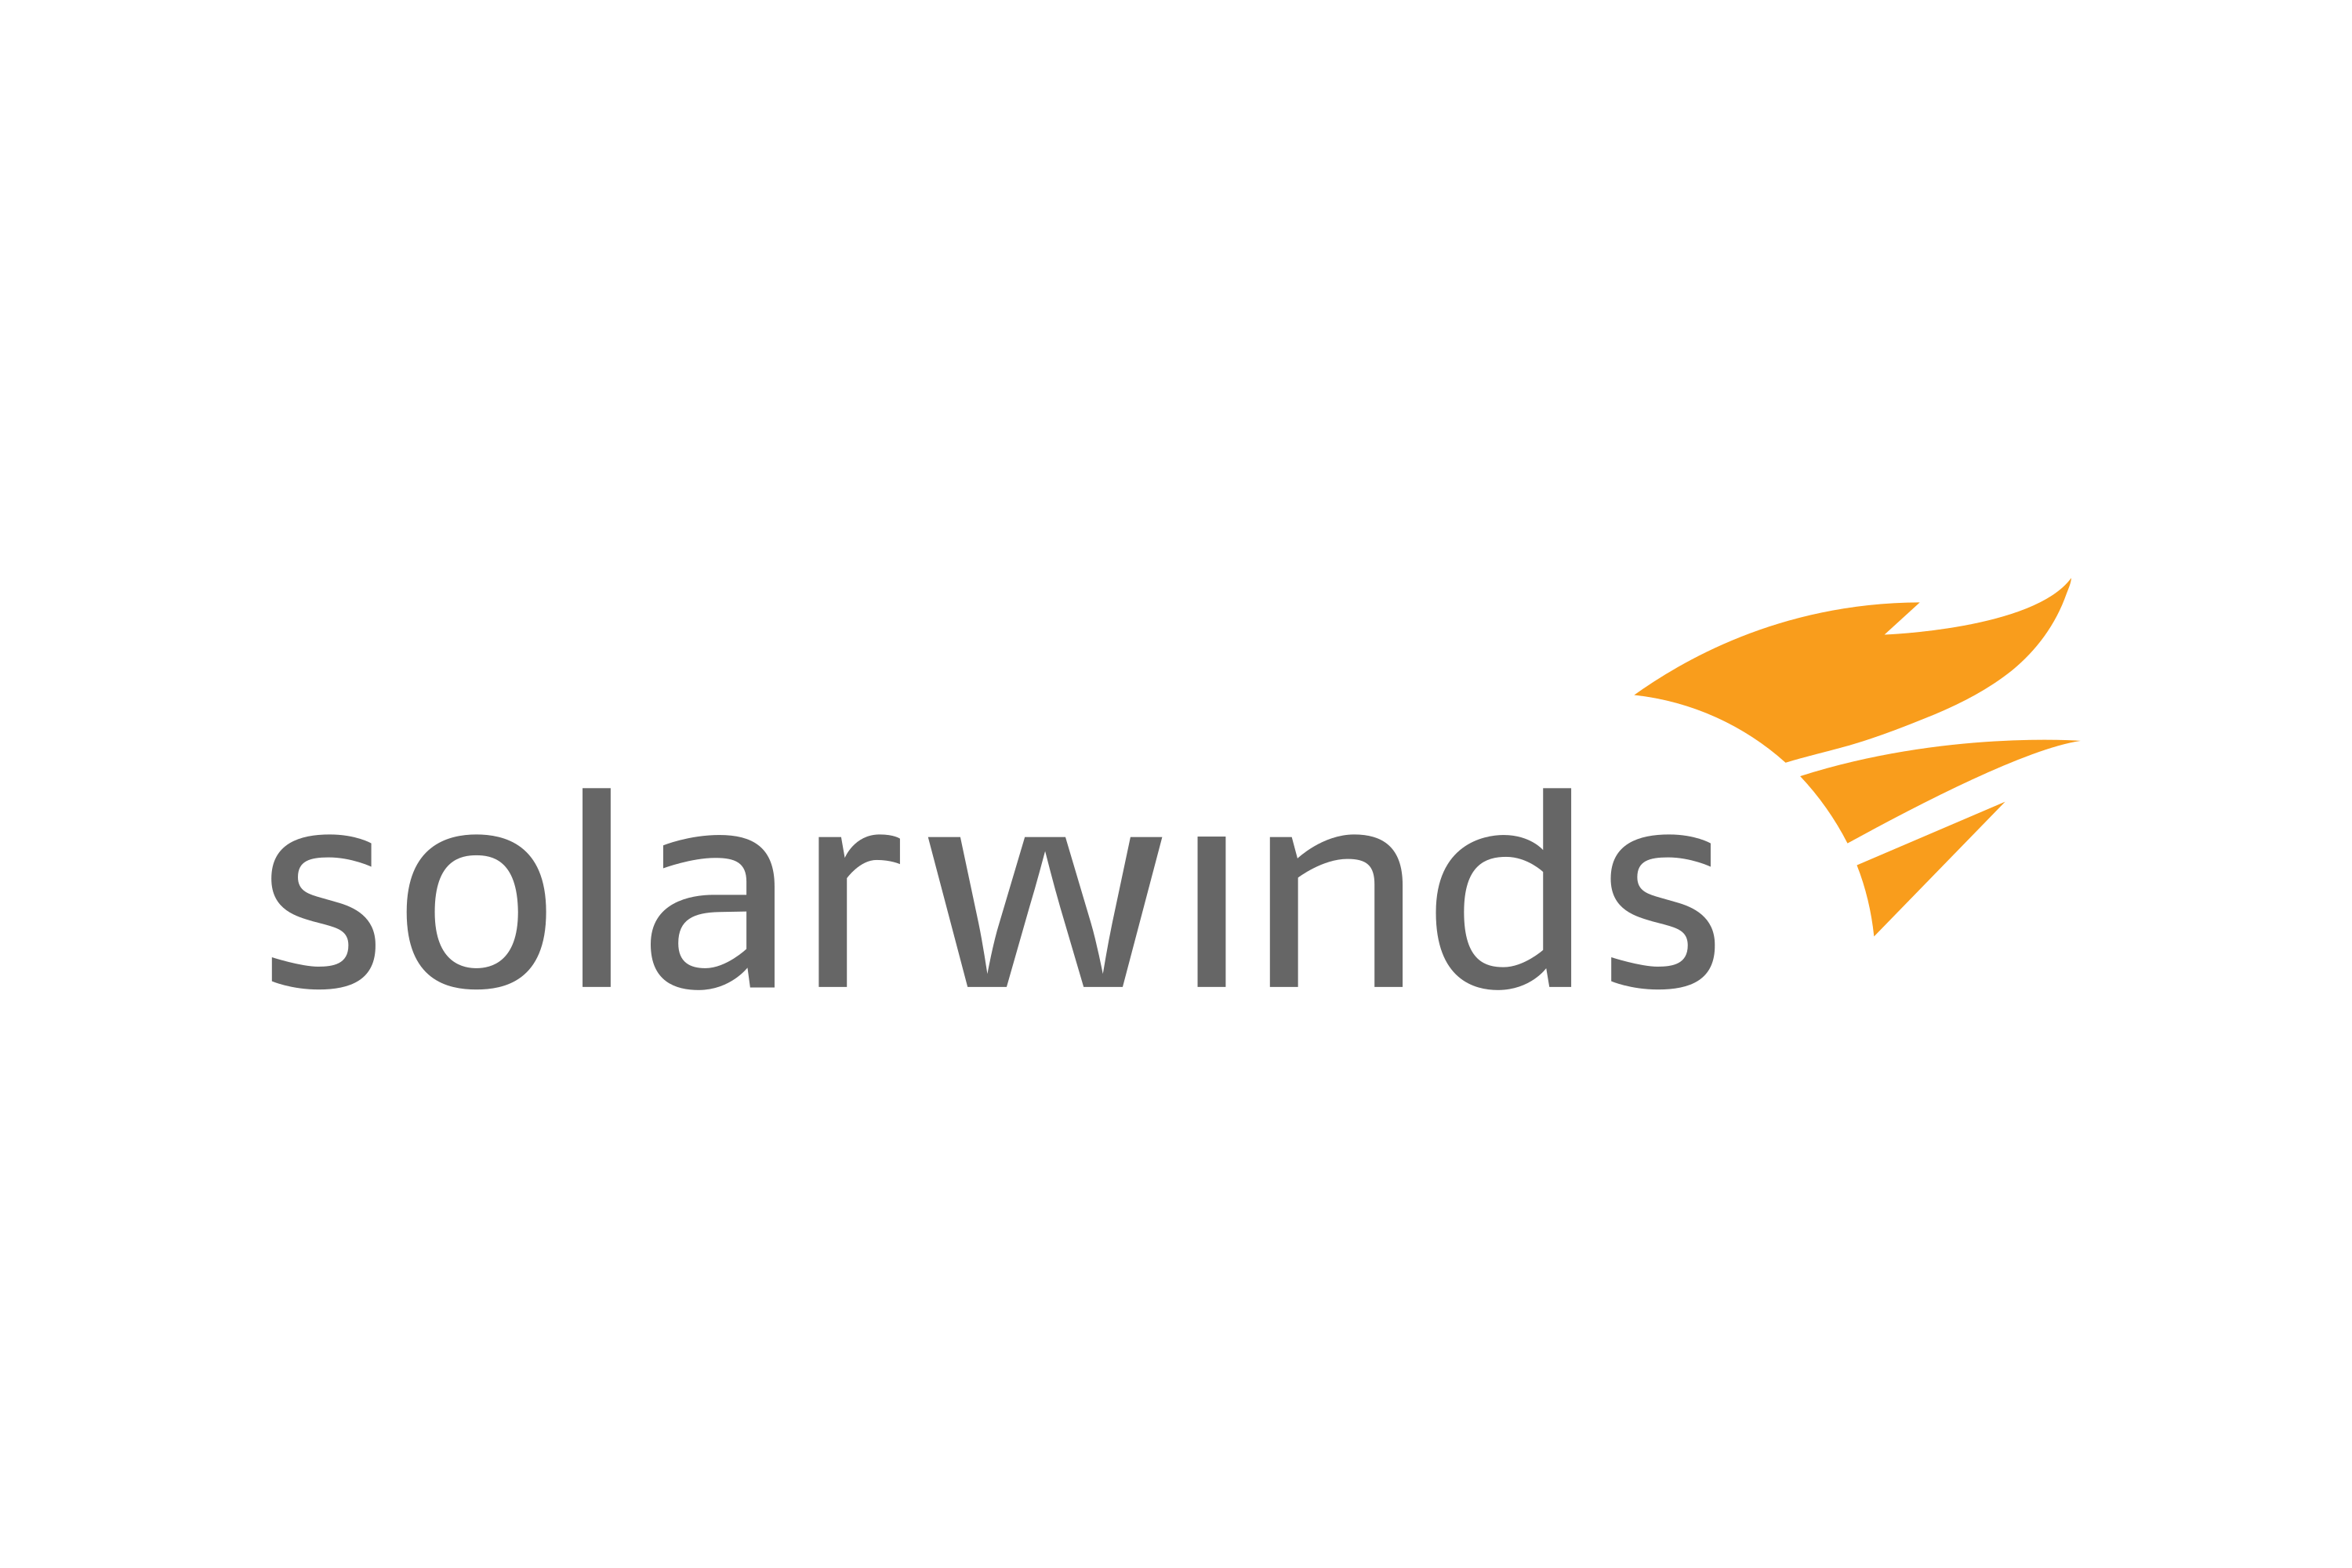 SolarWinds